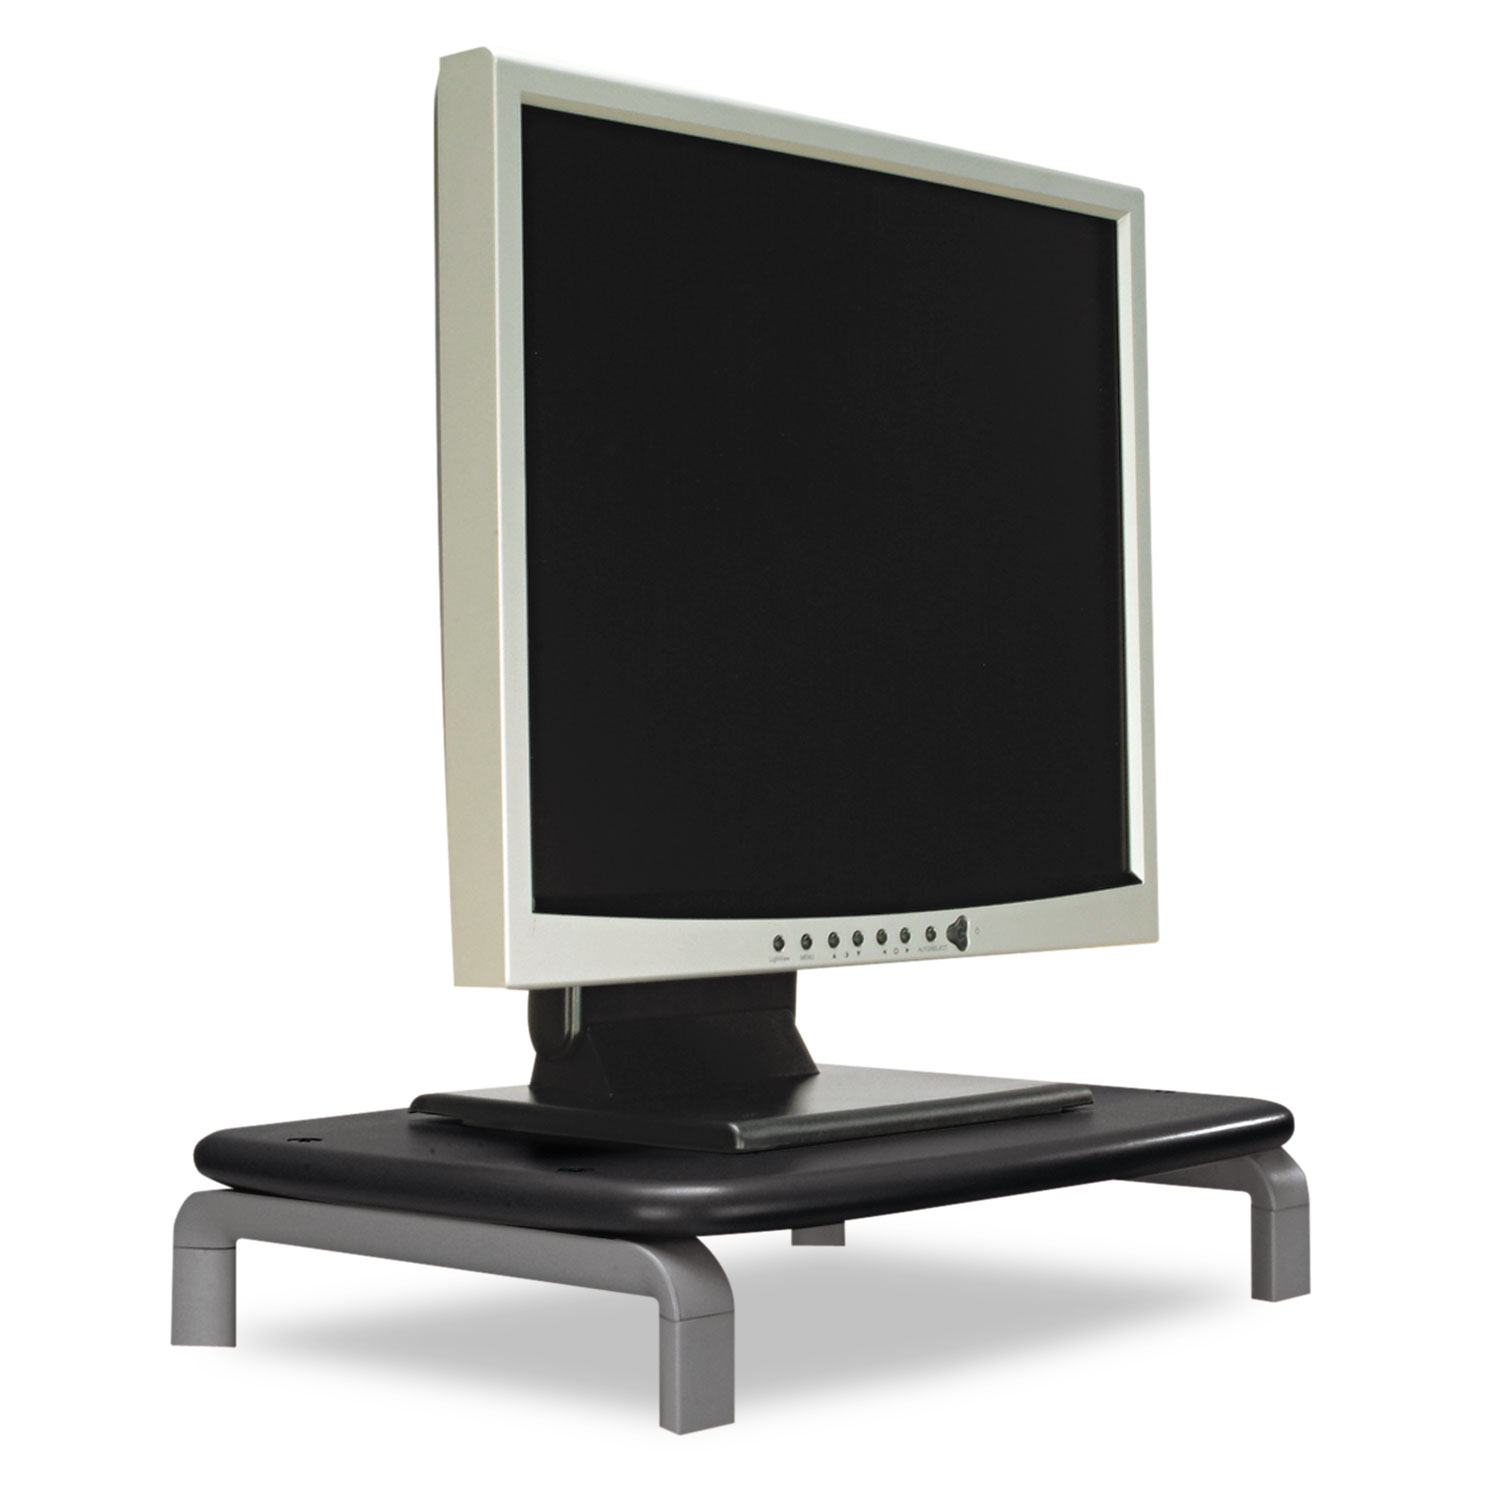  Kensington K60087F Monitor Stand with SmartFit System, 11.5 x 9 x 3, Black/Gray (KMW60087) 